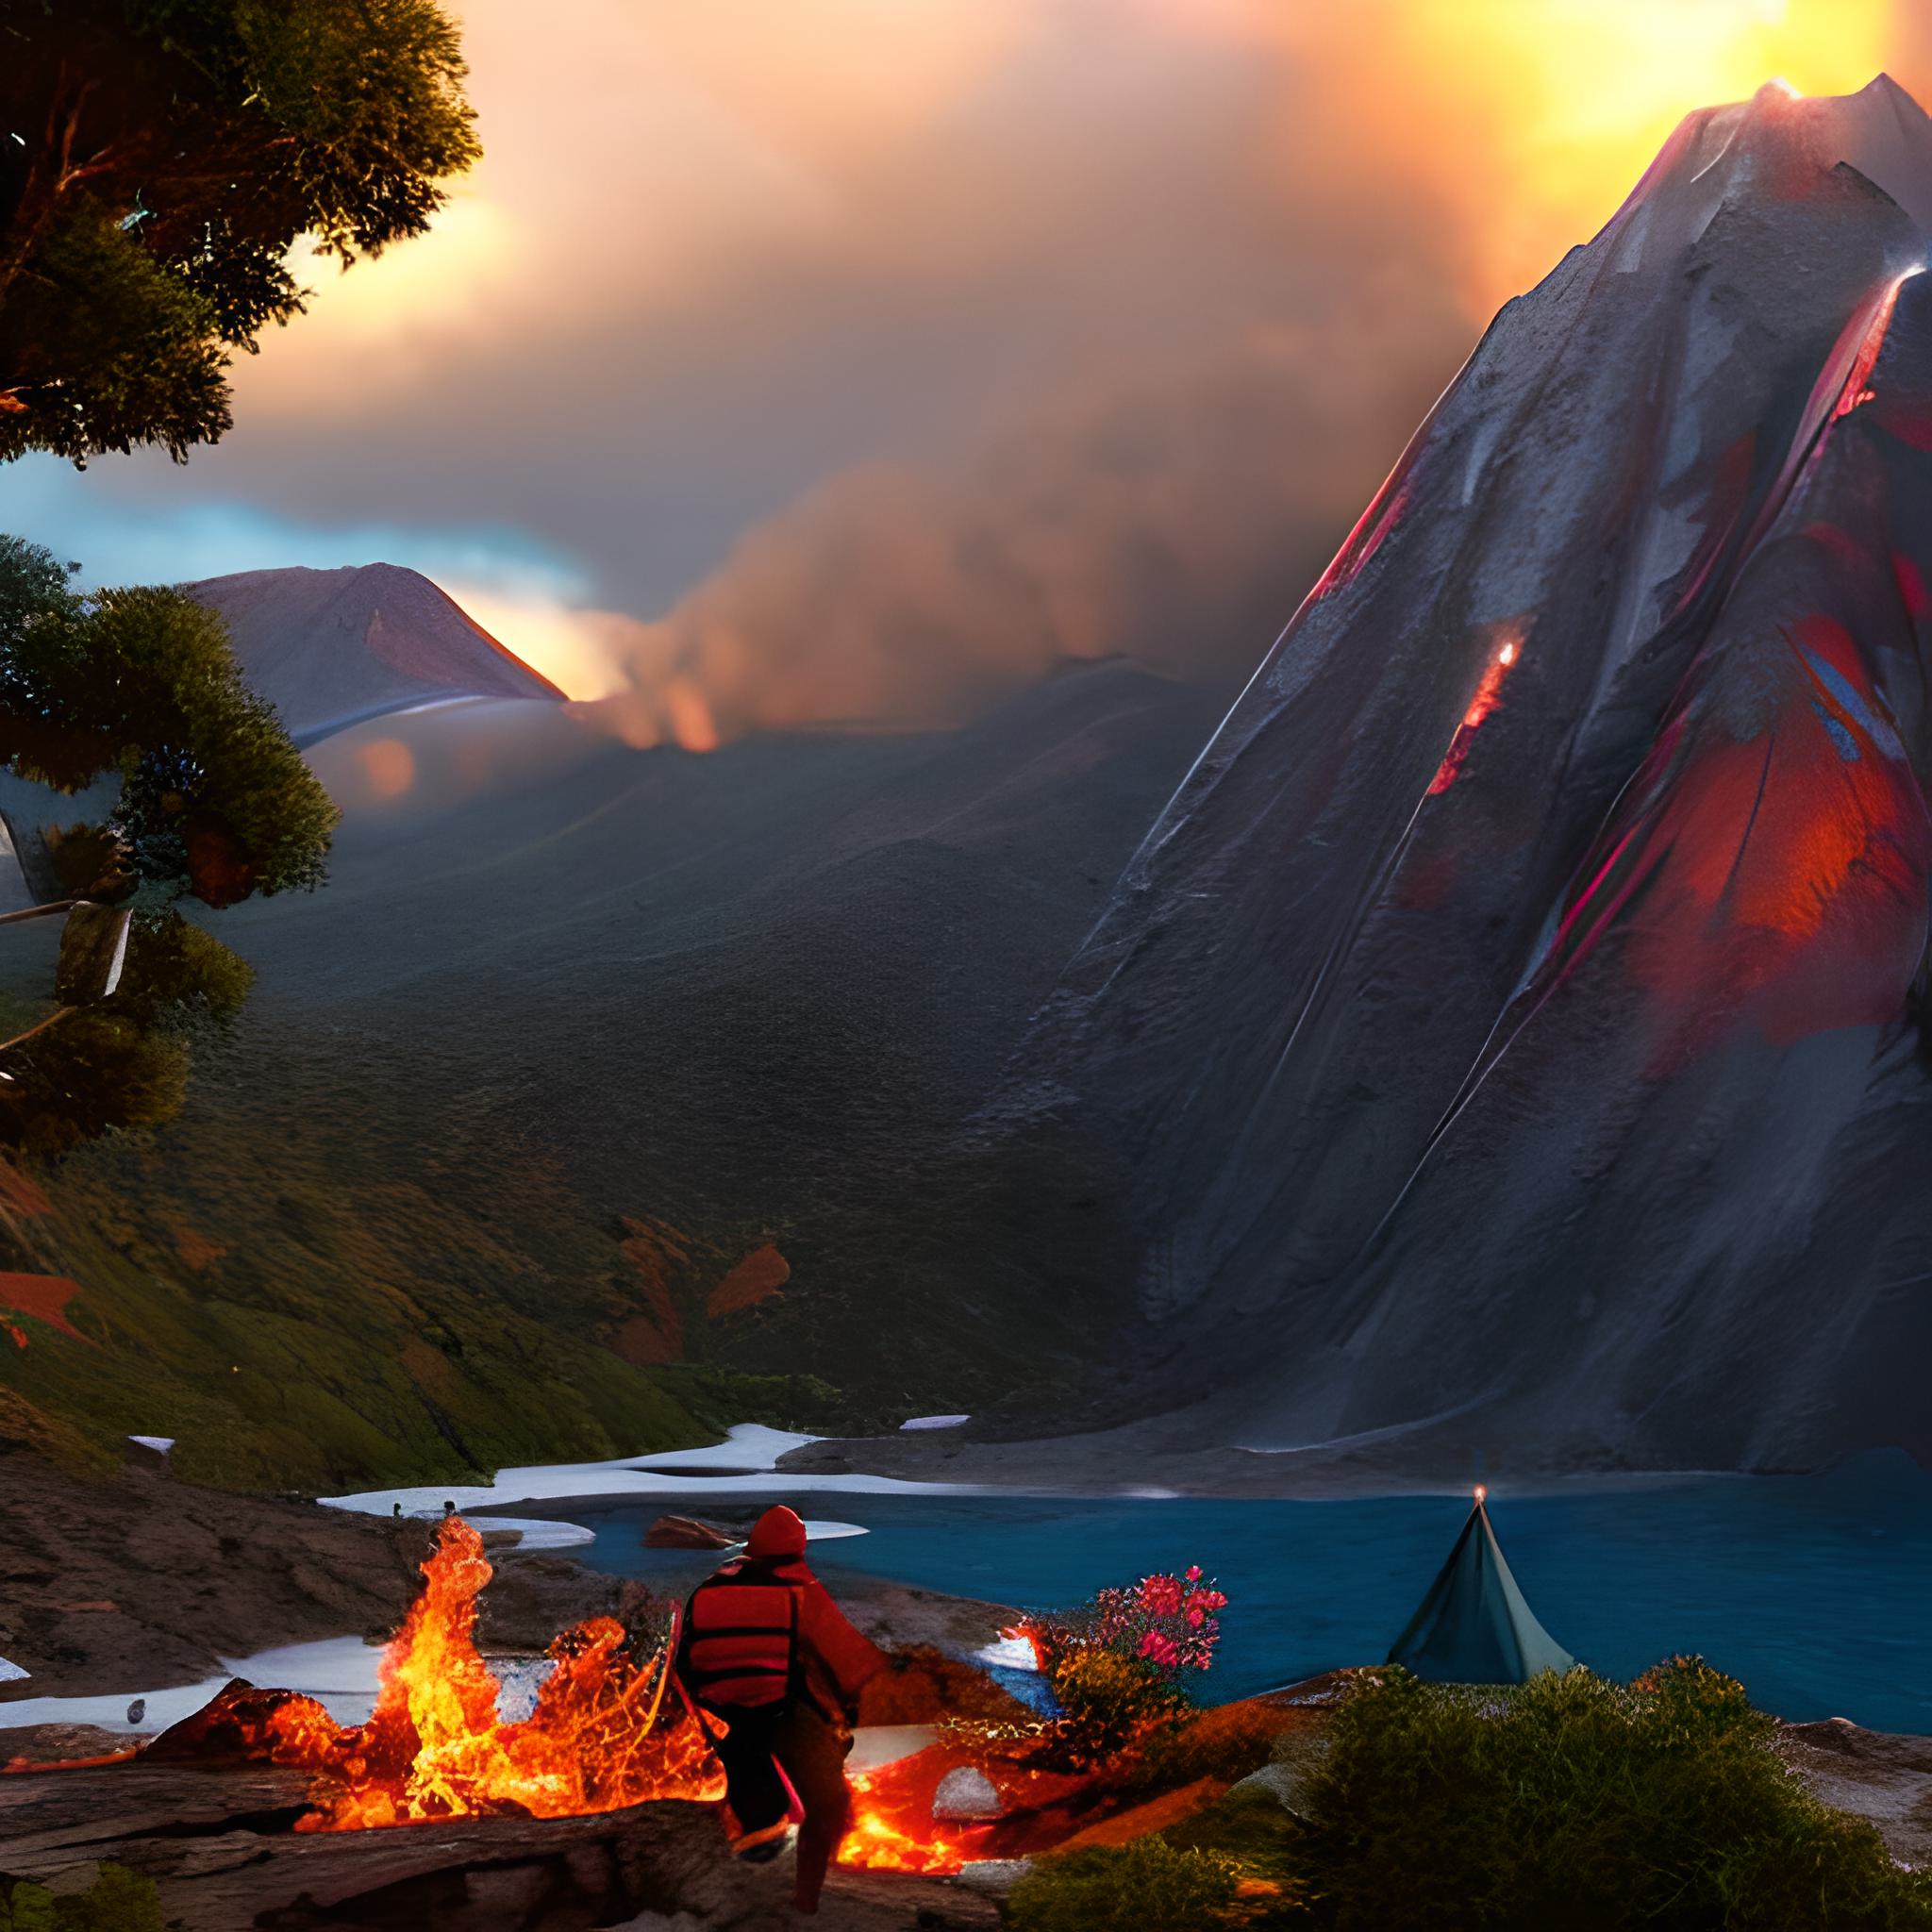 Valcano Camping